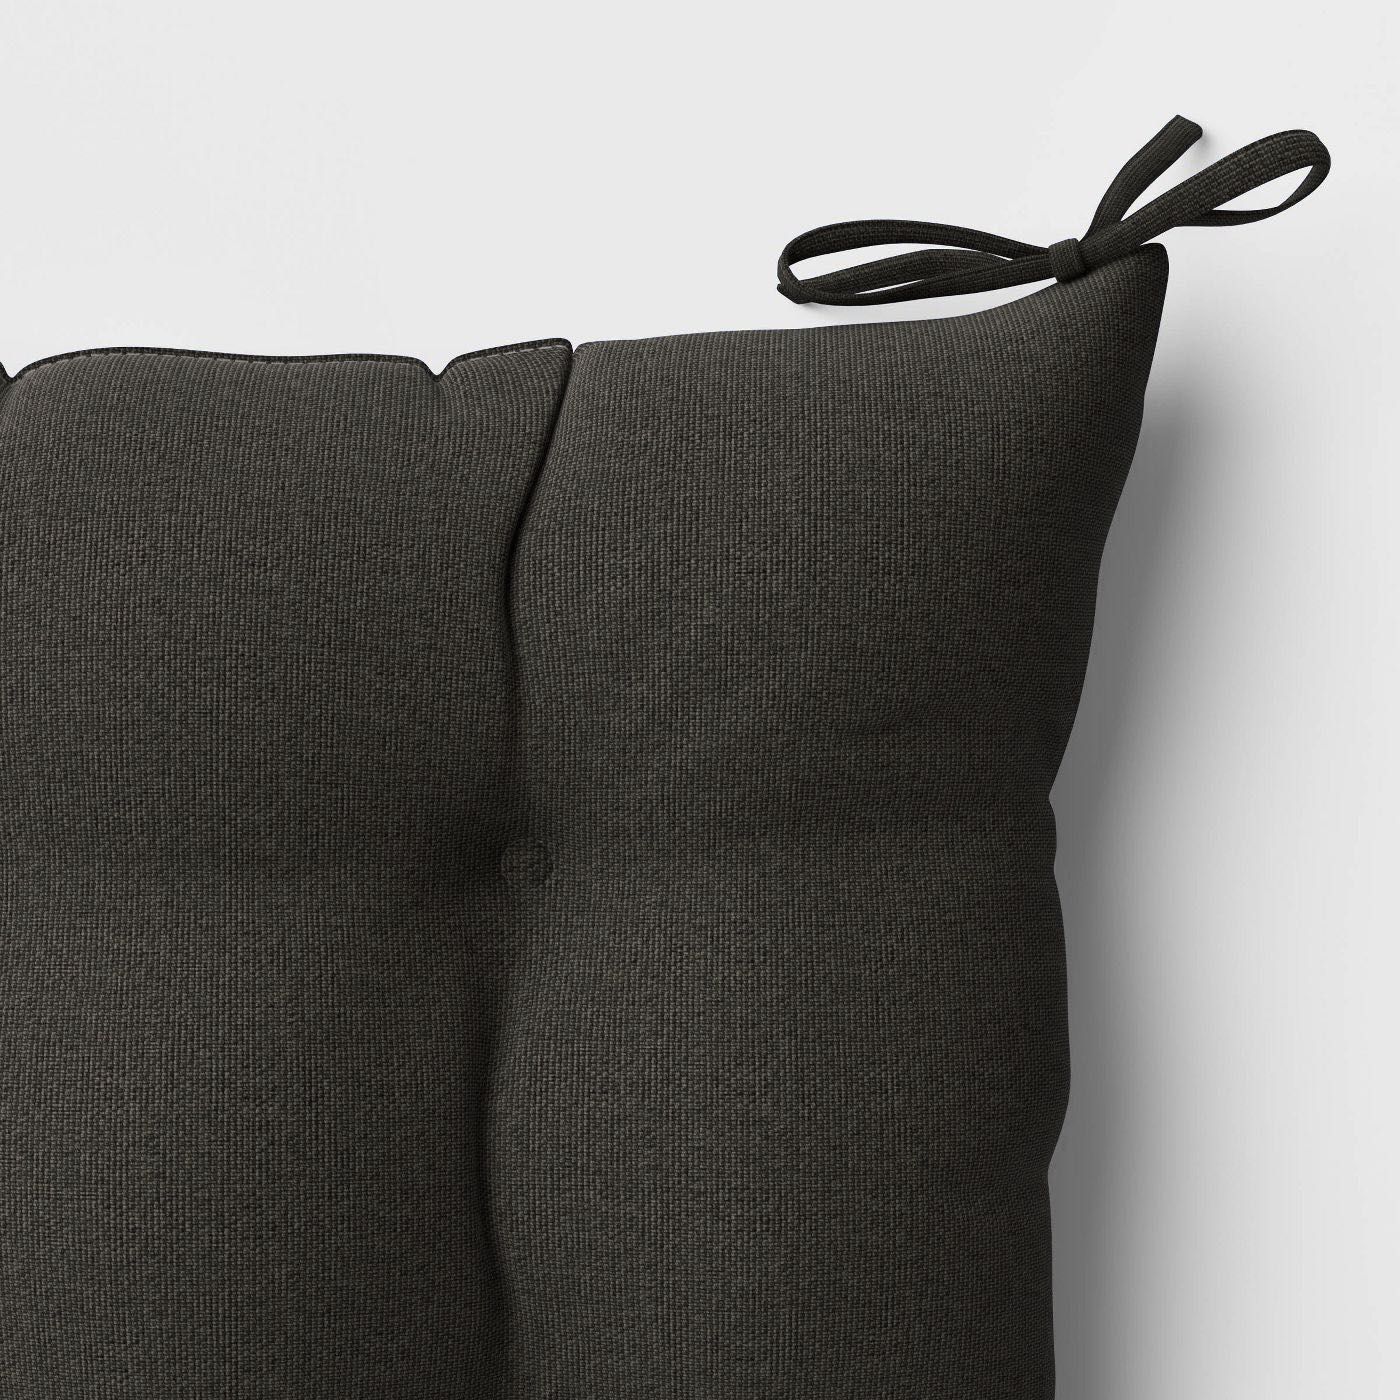 Подушка из холофайбера на стул 100х100х5см Оксфор, 7 размеров 36 цвета